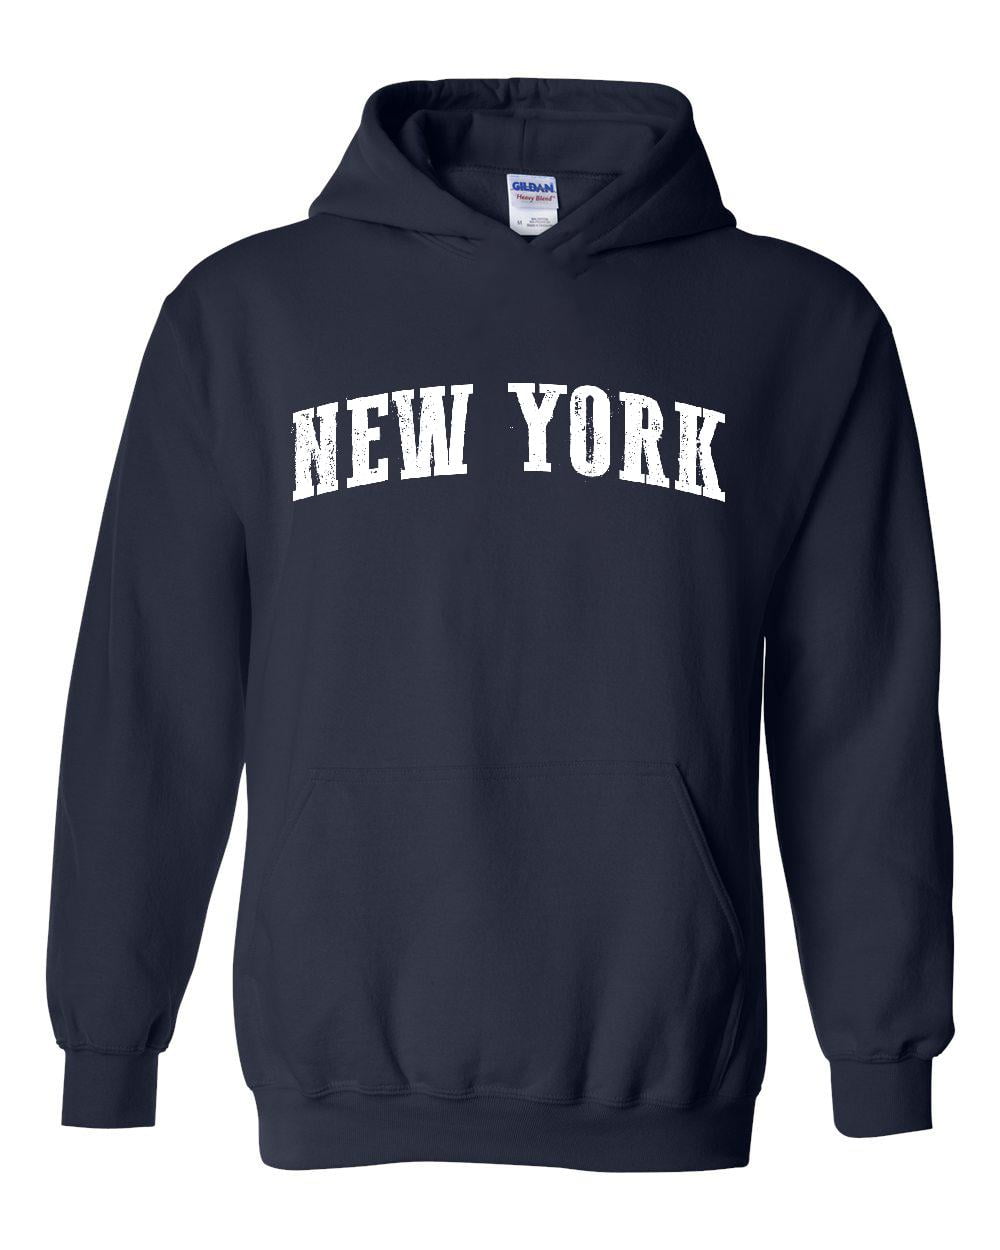 IWPF - Unisex New York City Hoodie Sweatshirt - Walmart.com - Walmart.com